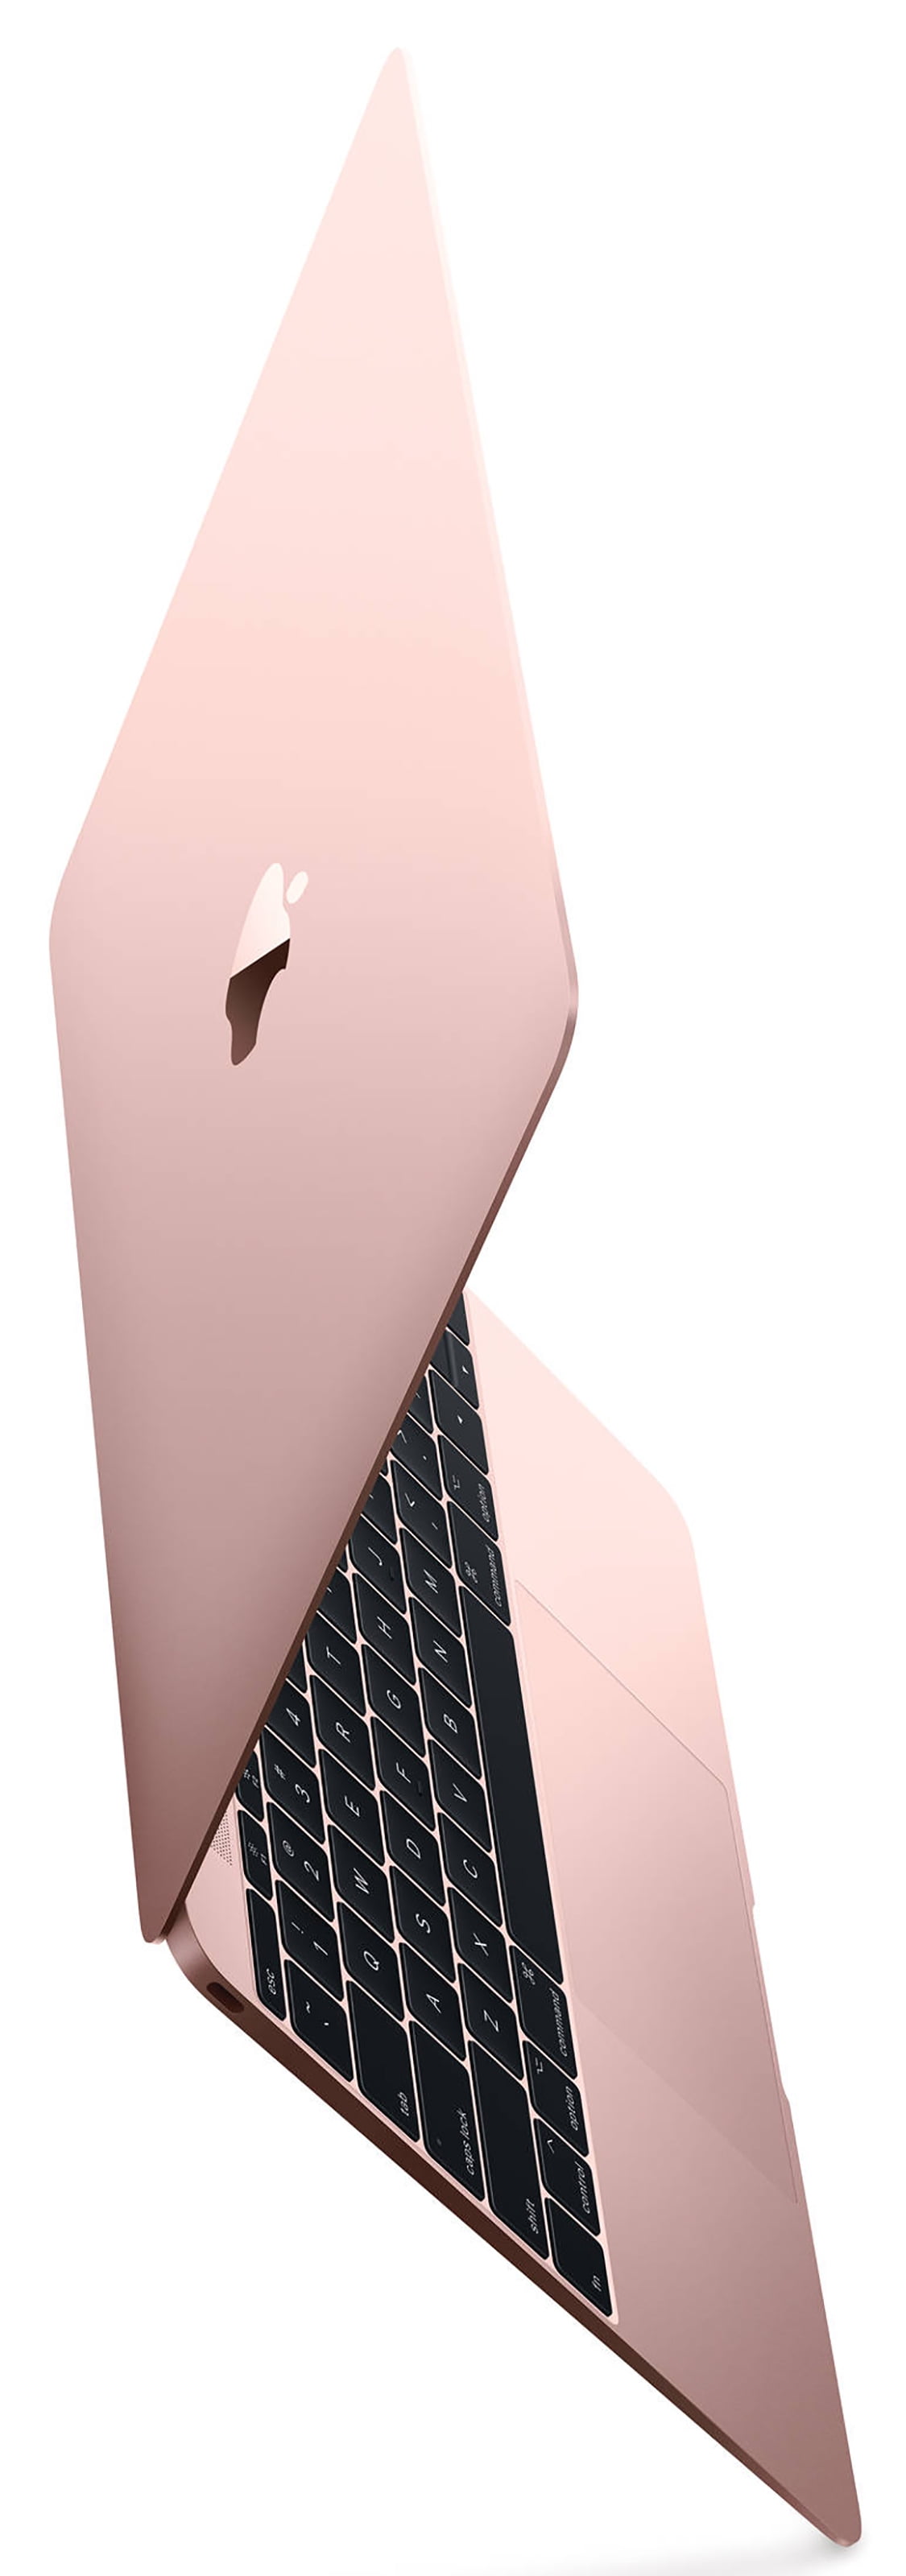 Apple Macbook (MNYF2LL/A) 12-inch Retina Display Intel Core m3 256GB - Rose  Gold (Mid-2017) (Certified Used) - Walmart.com